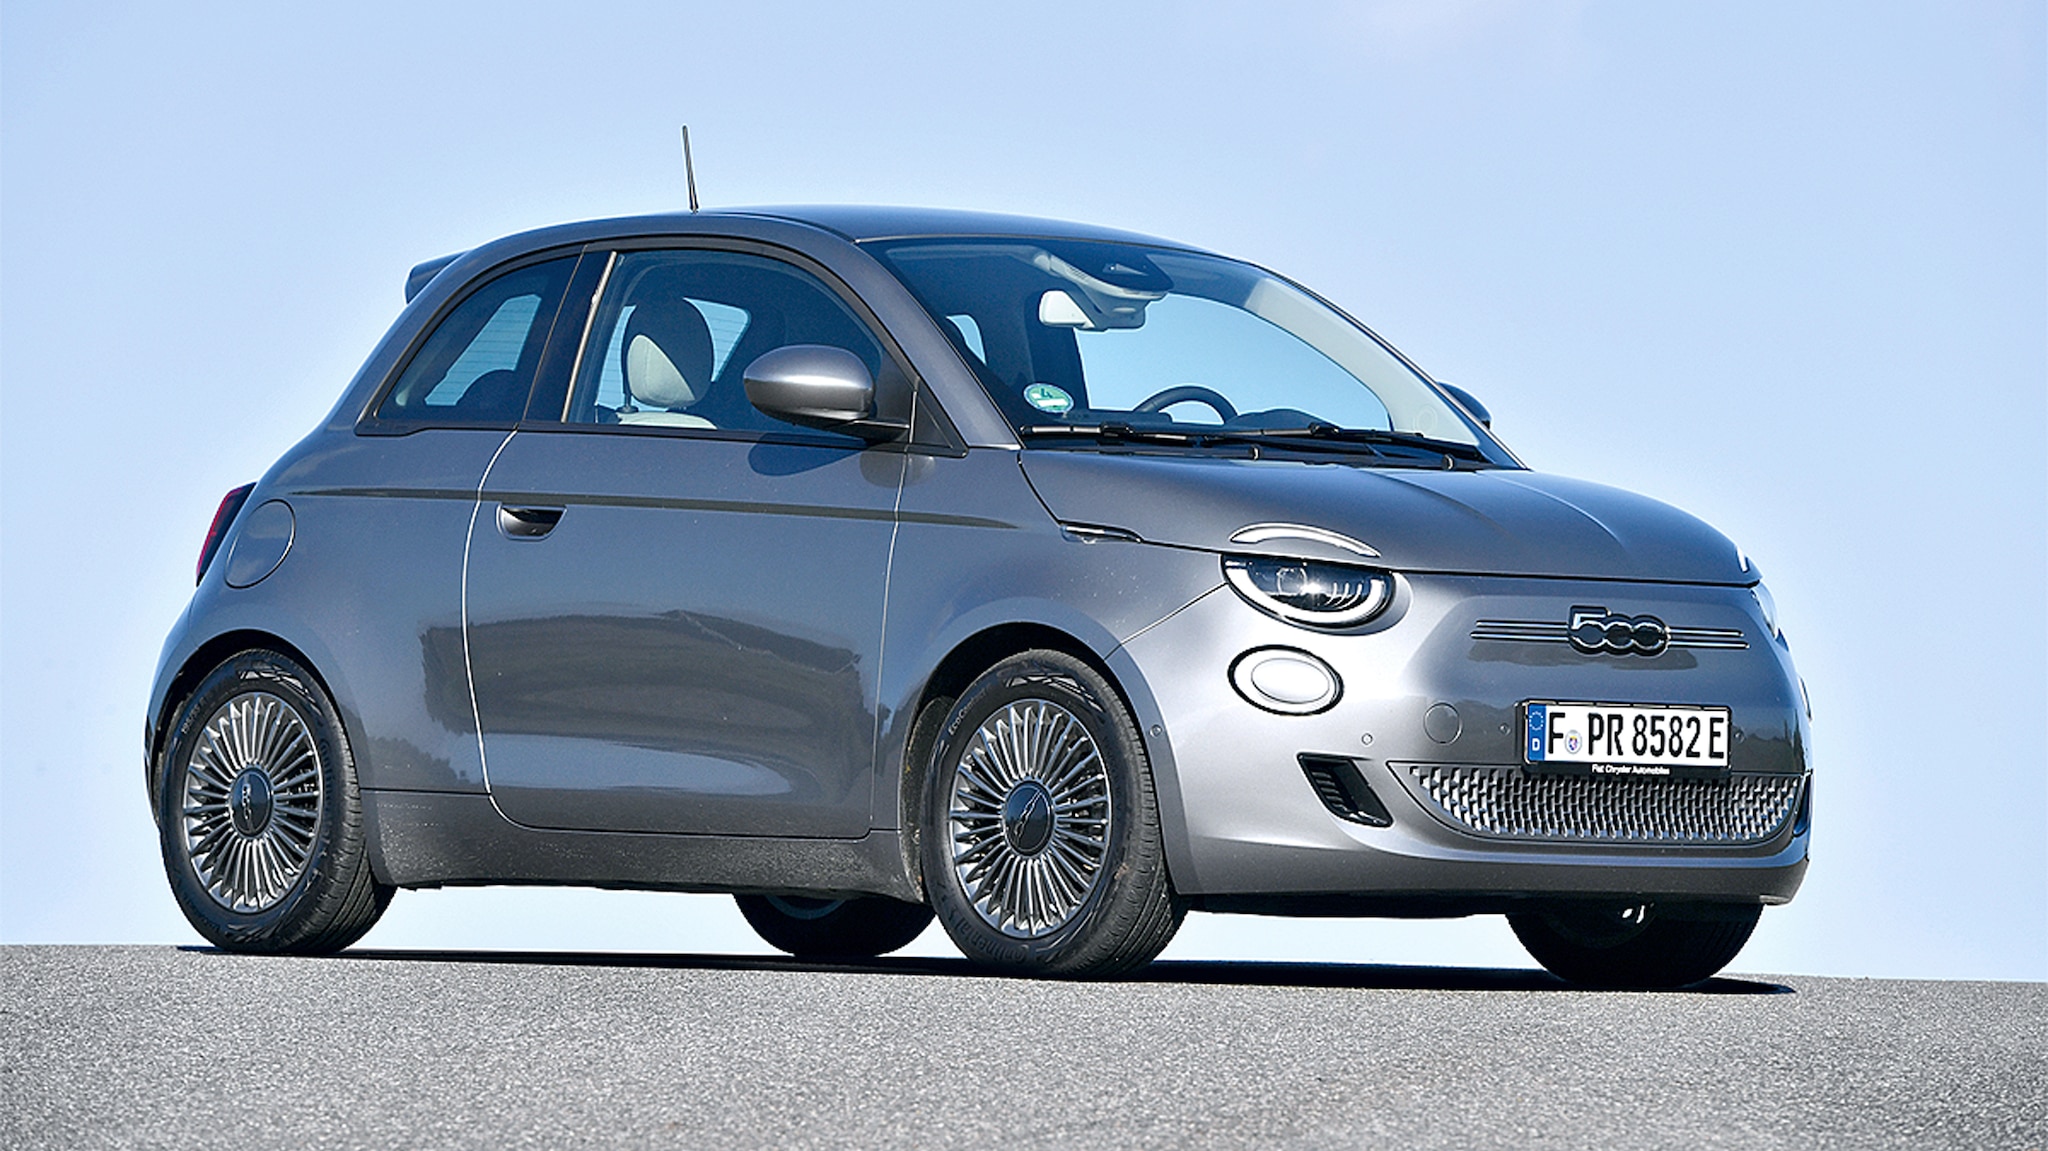 Fiat-500e-2022-Leasing-Elektro-Reichweite-Preis-Action-Den-Fiat-500e-f-r-weniger-als-100-Euro-leasen